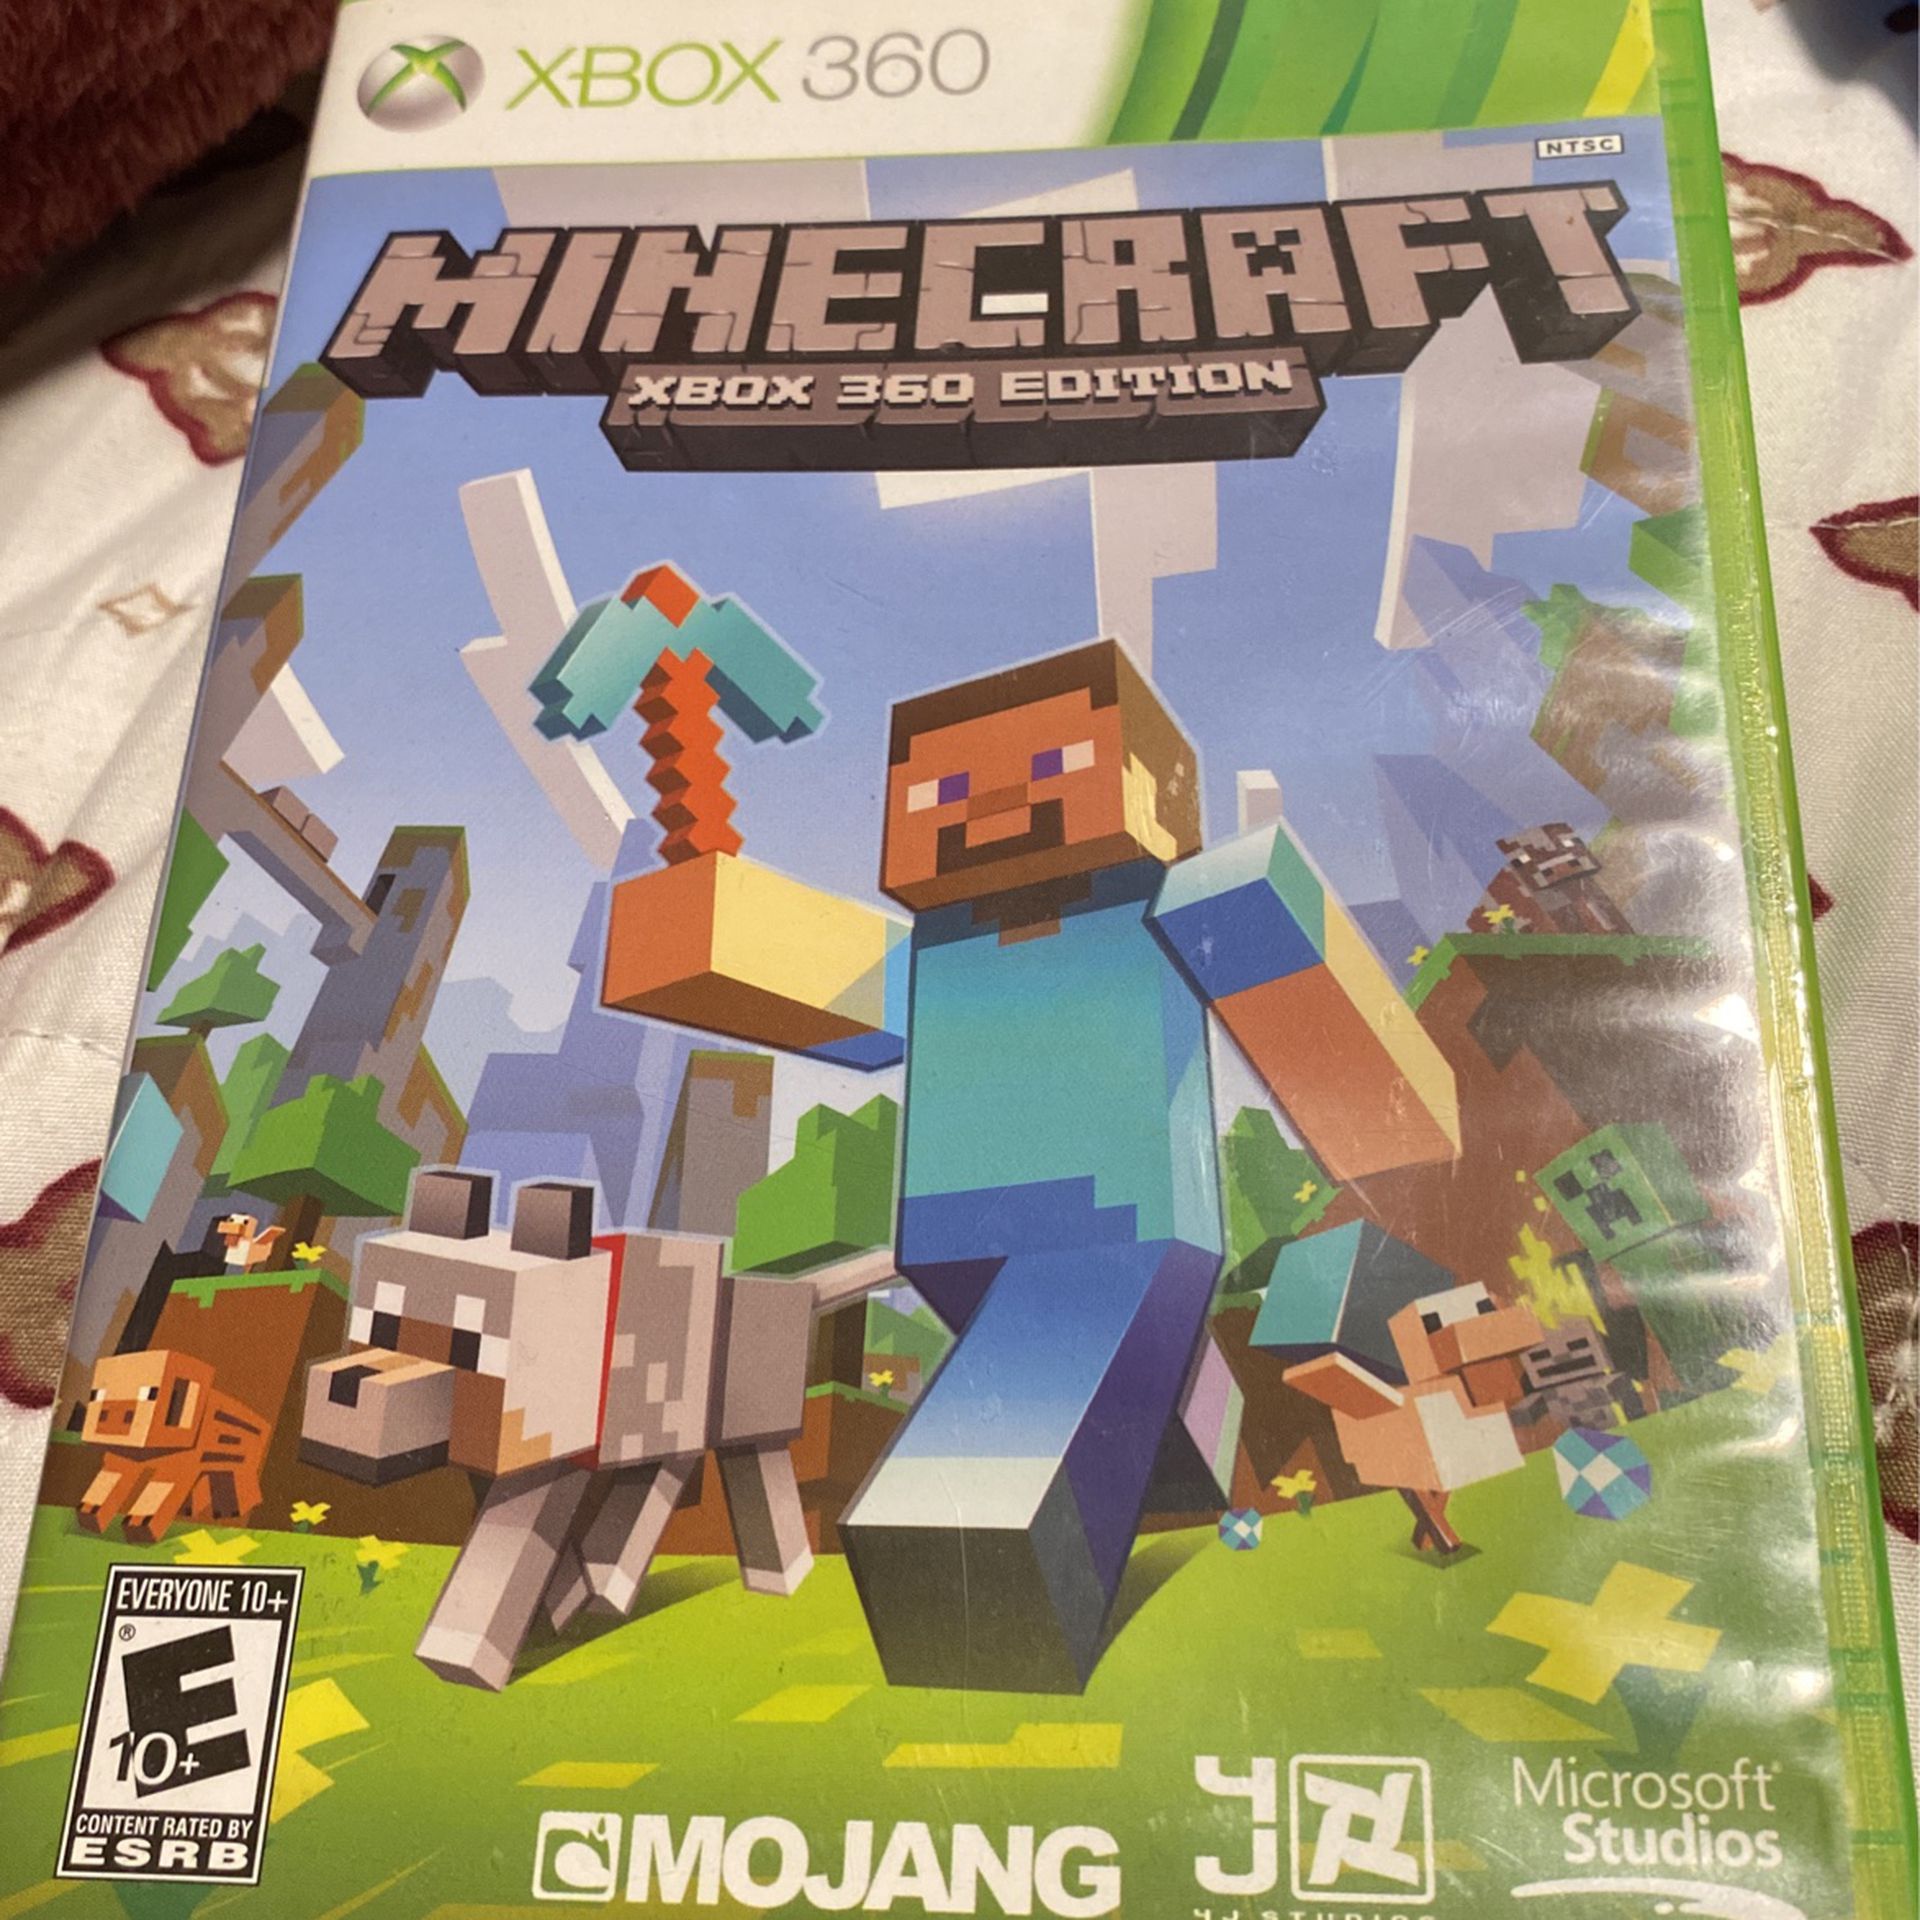 Minecraft For Xbox 360 